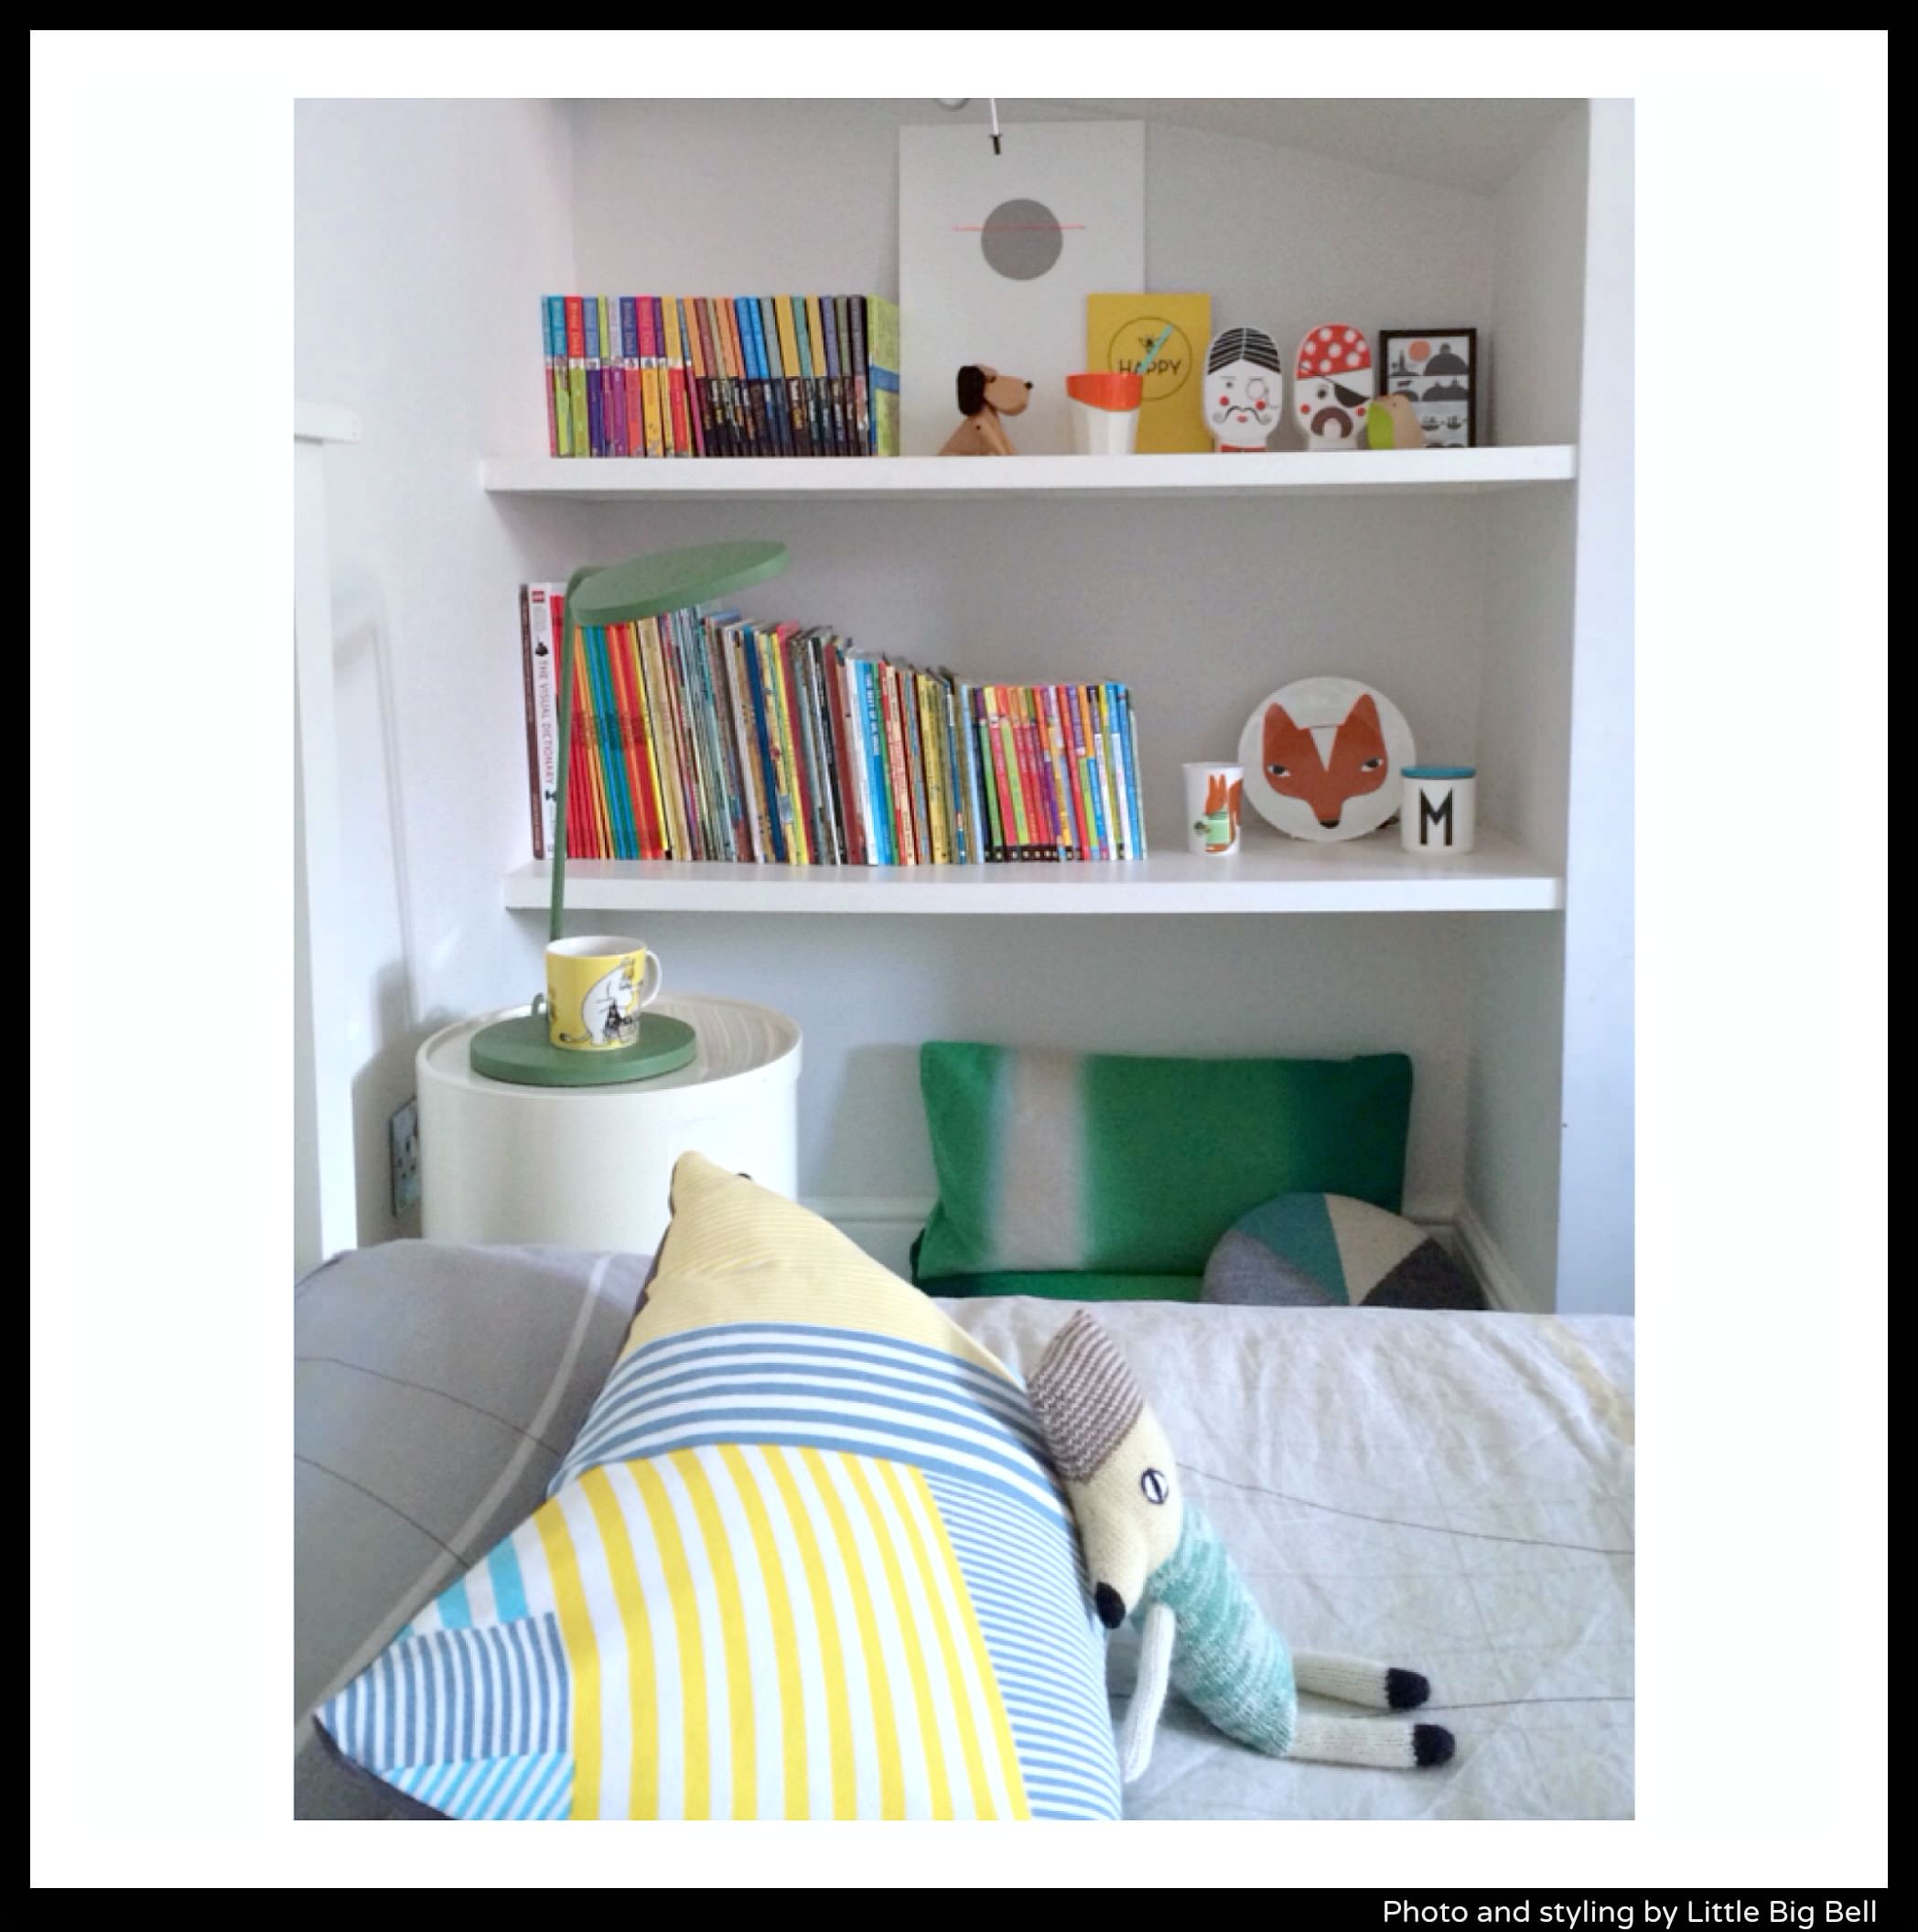 The-Sunday-Times-home-children's-bedroom-Little-Big-Bell-Geraldine-Tan.jpg